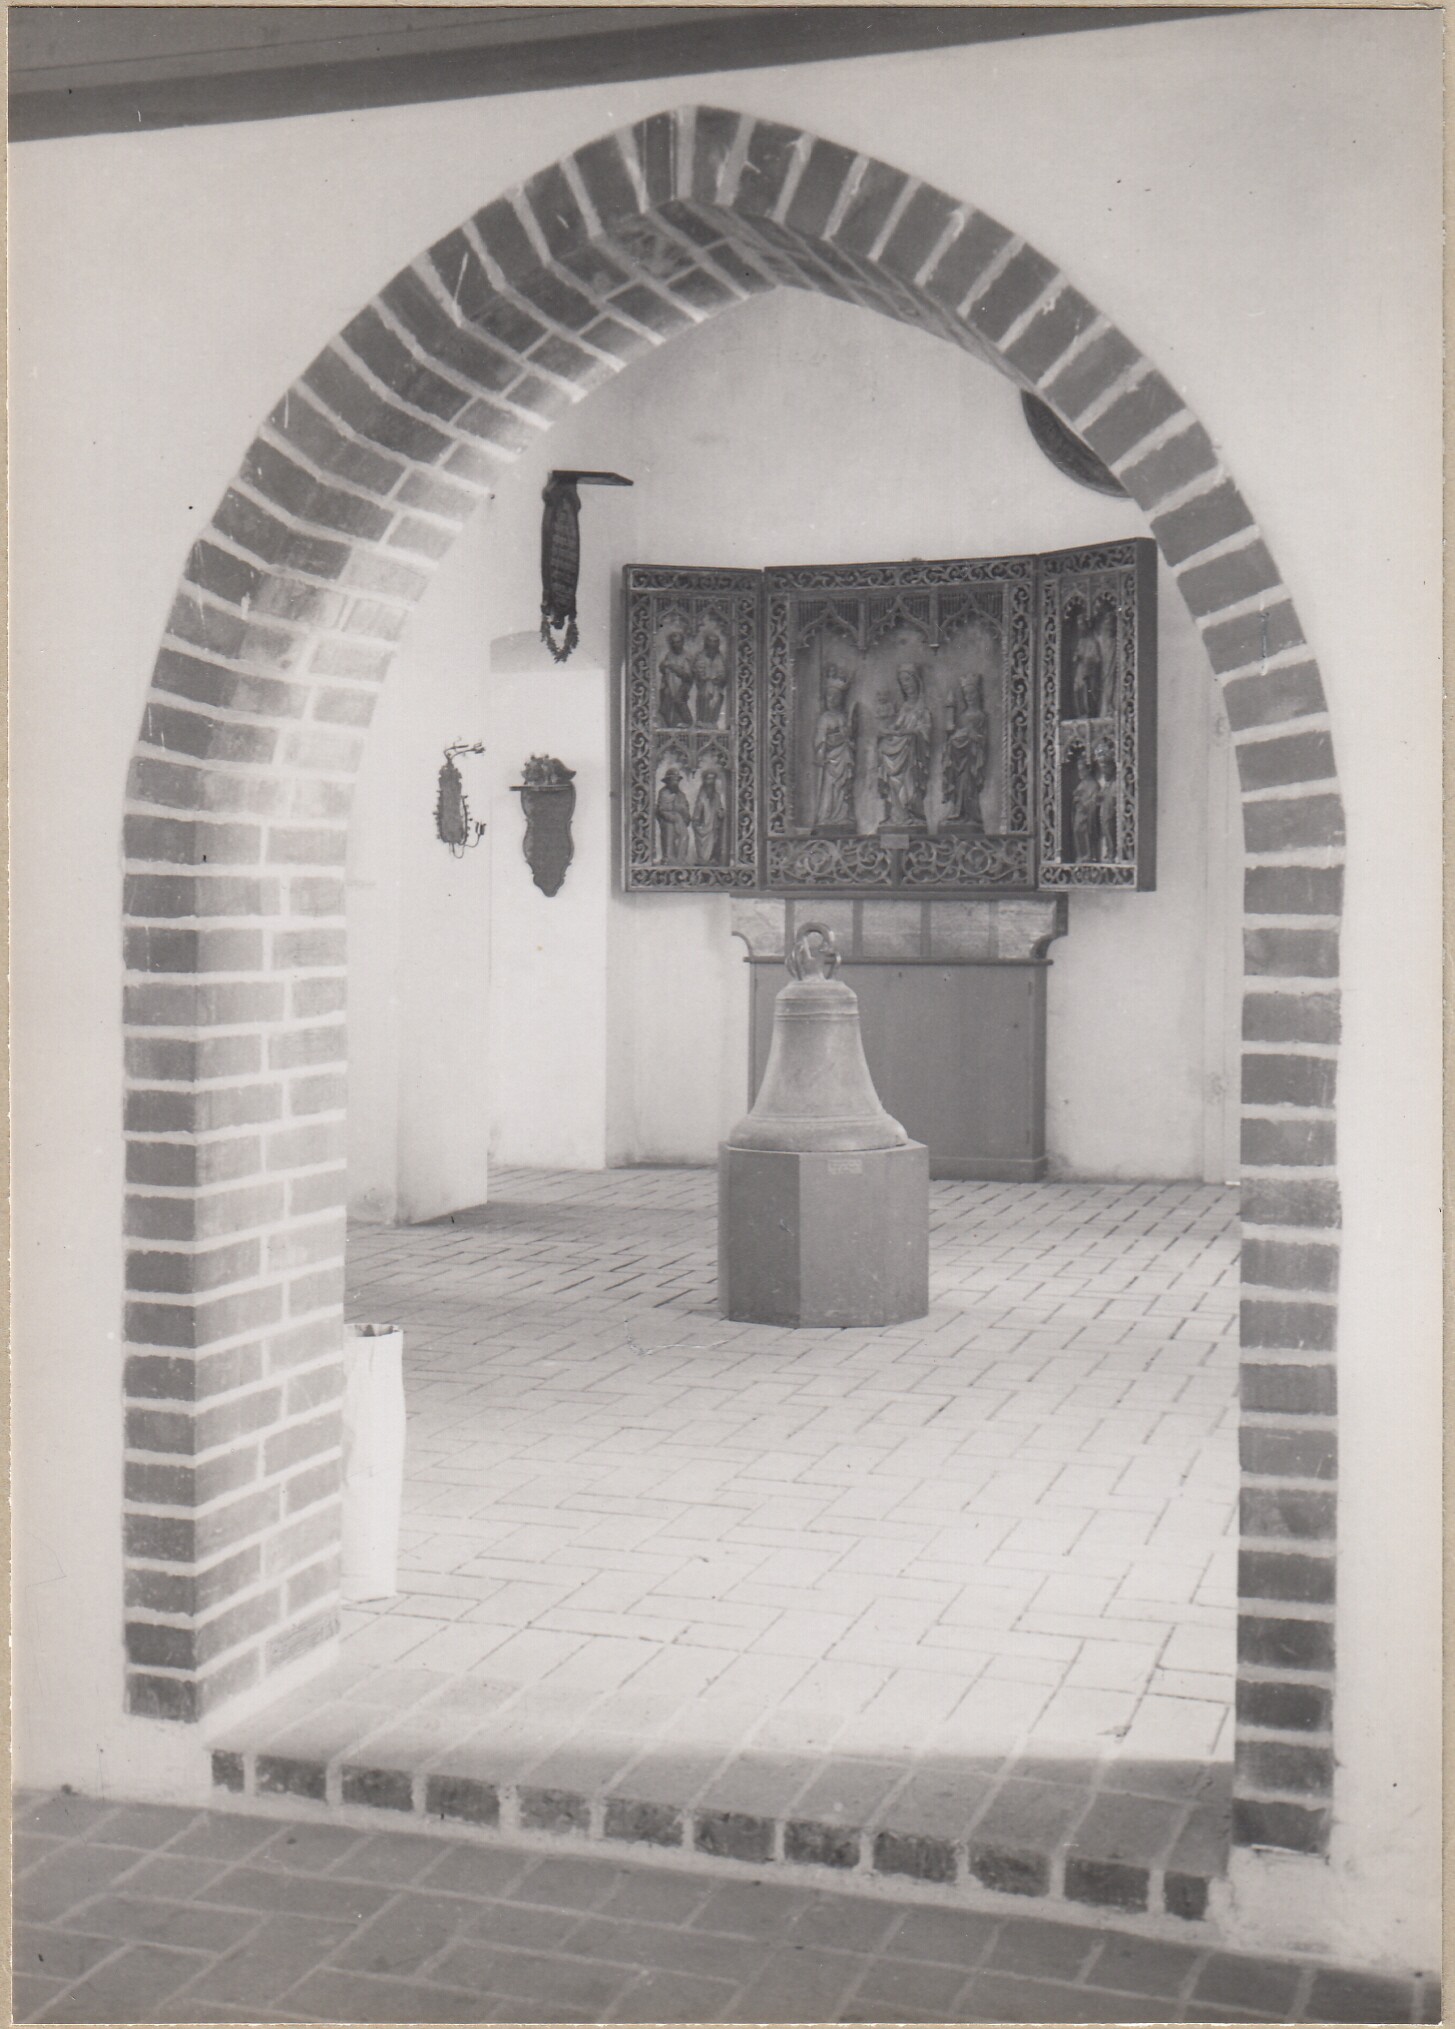 2168: Museumsinterieur: "Raum für kirchliche Kunst" (Glocke, Flügelaltar) (Albert-Heyde-Stiftung CC BY-NC-SA)